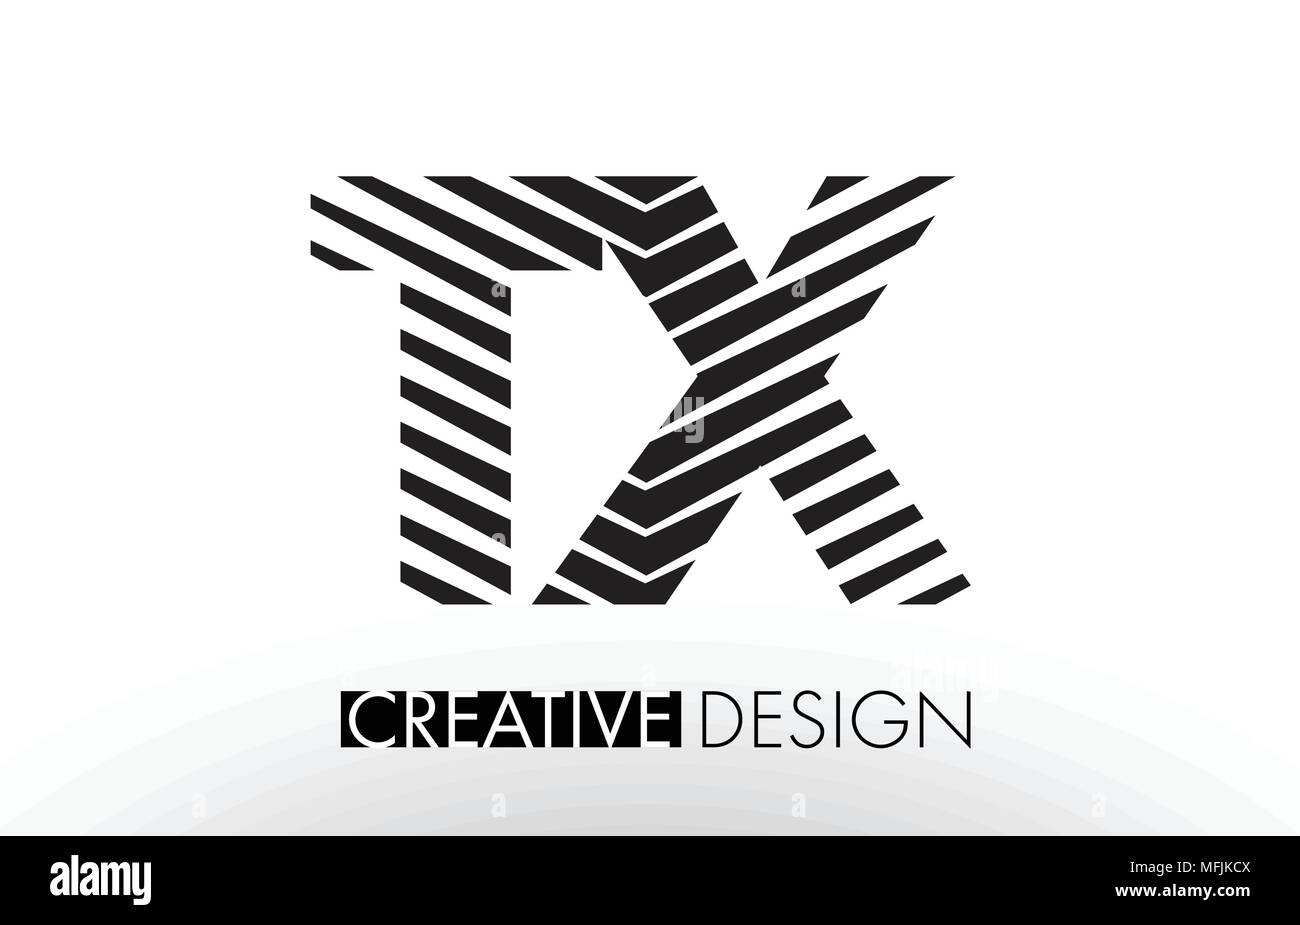 TX T X Lines Letter Design with Creative Elegant Zebra Vector Illustration. Stock Vector